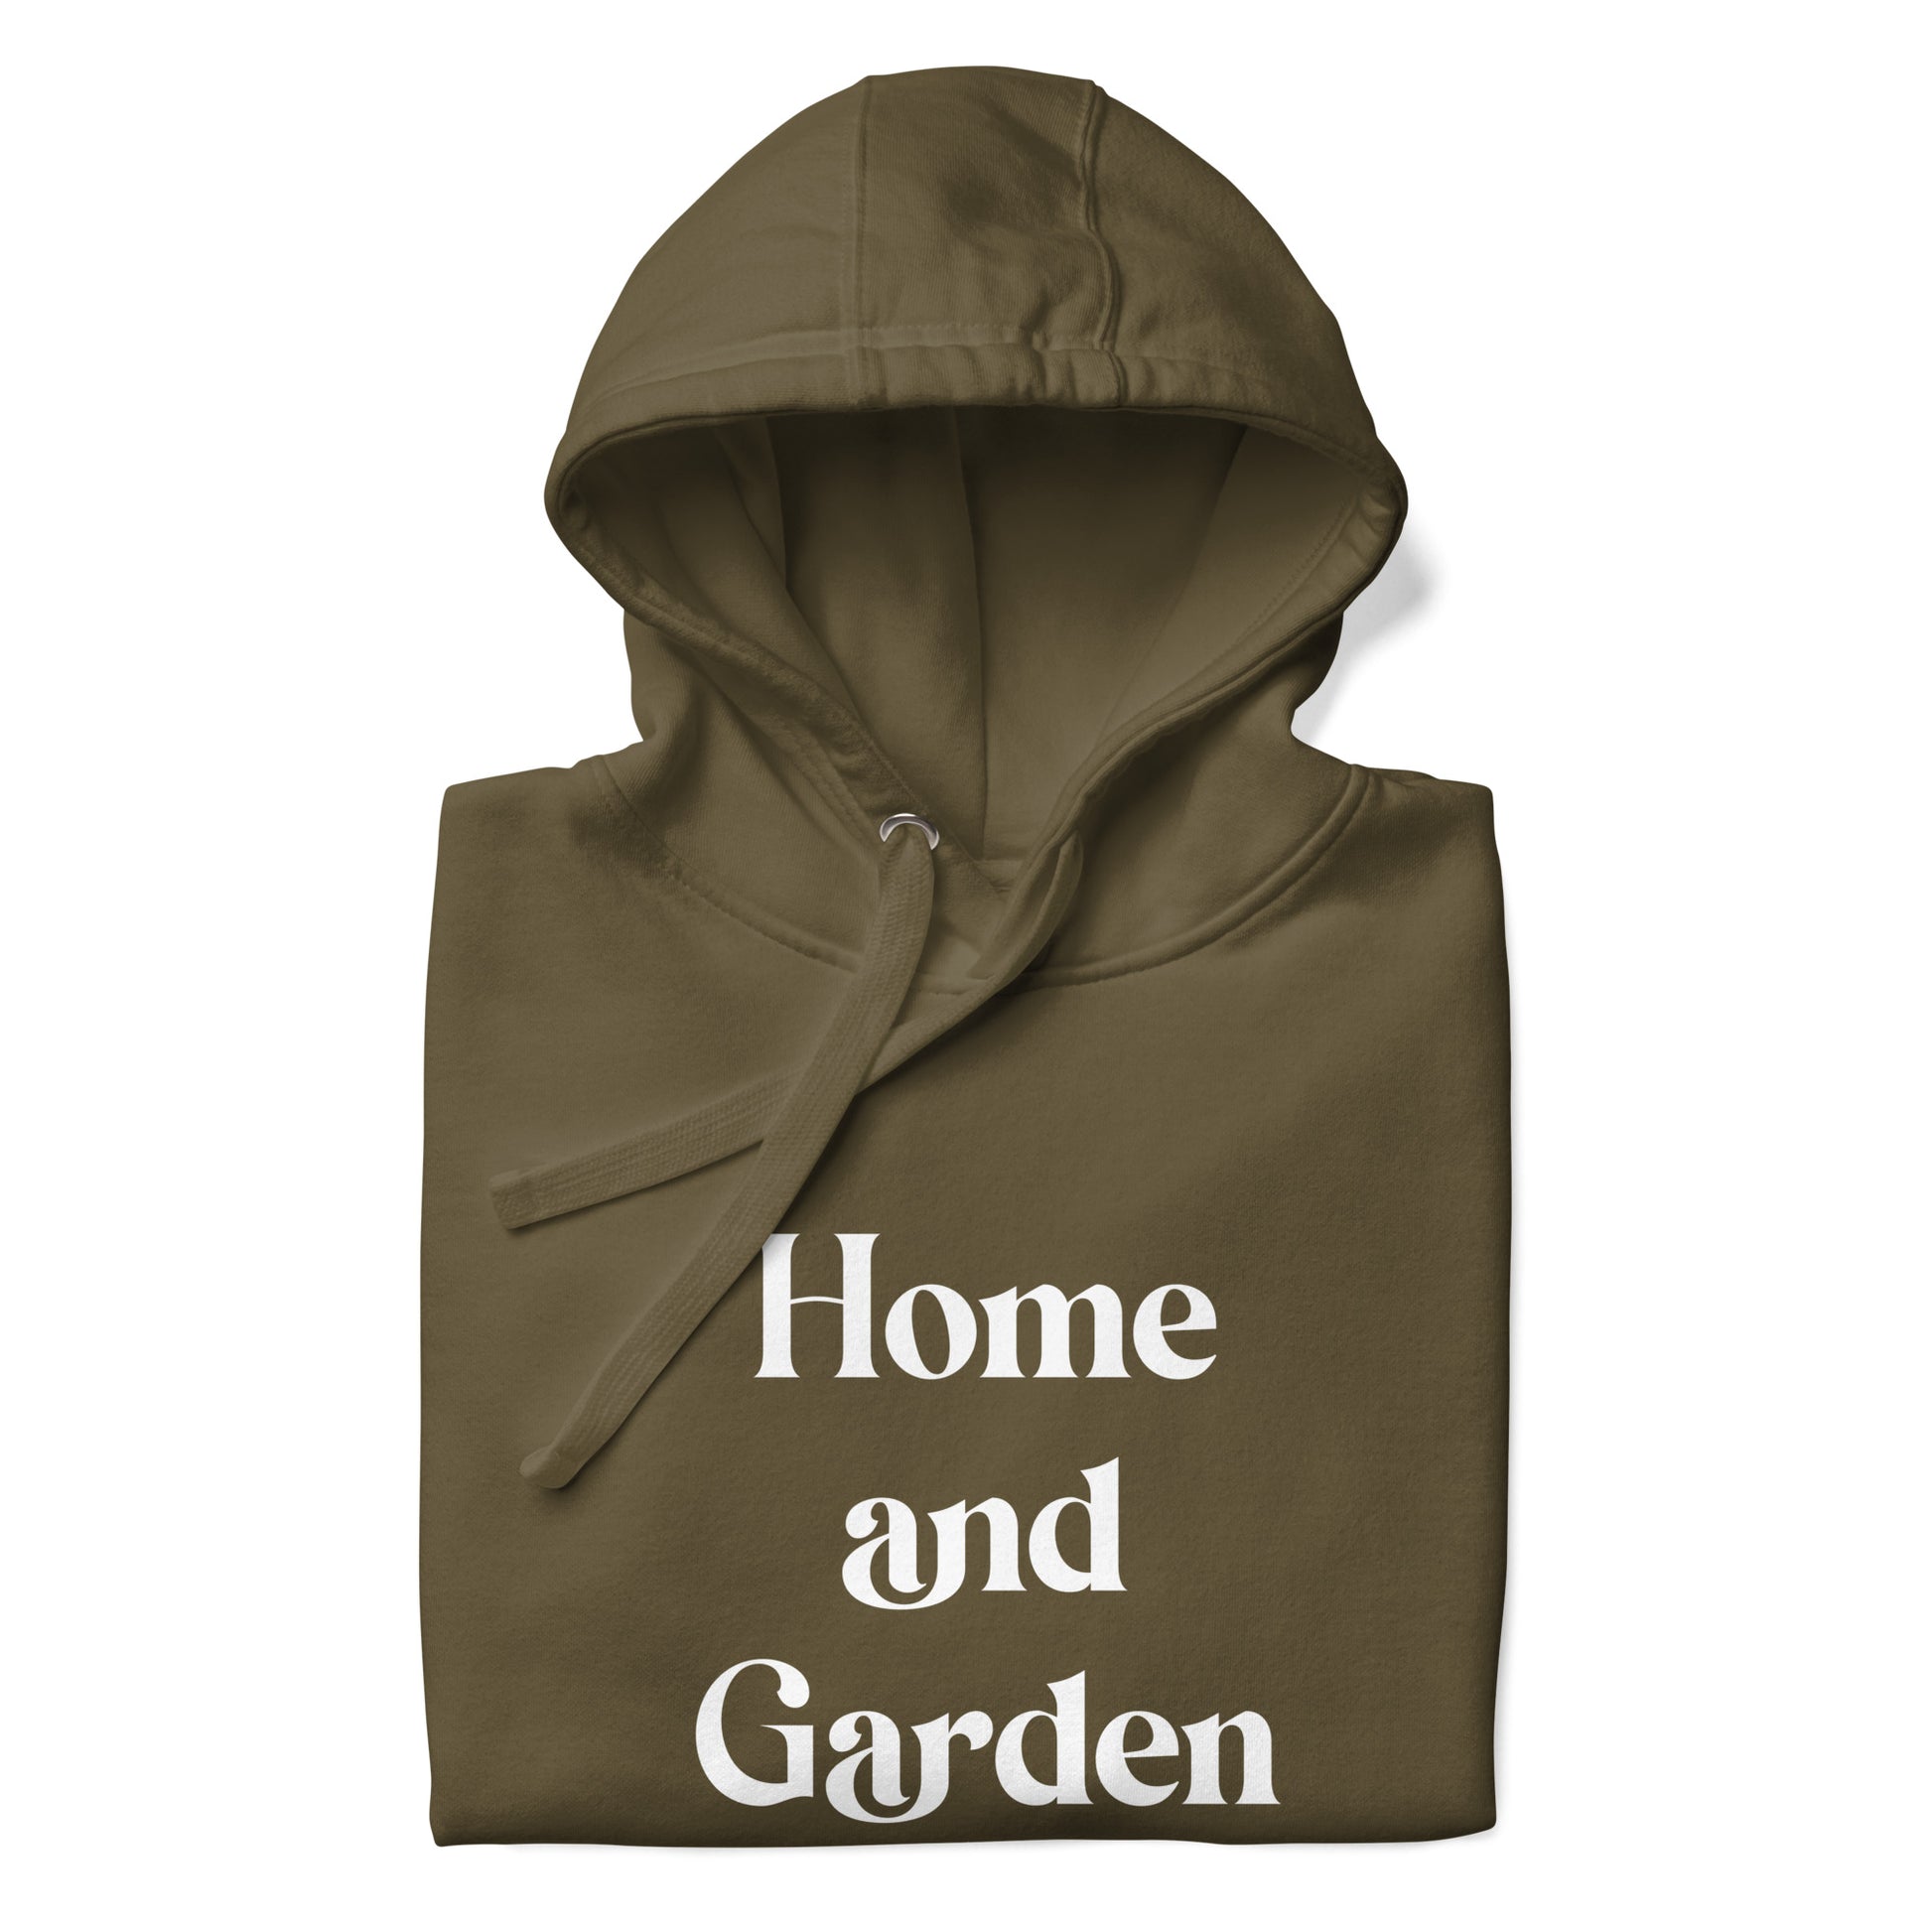 cannabis weed gift hoodie festival look green hoodie graphic sweatshirt gifts for stoners 420 friendly 